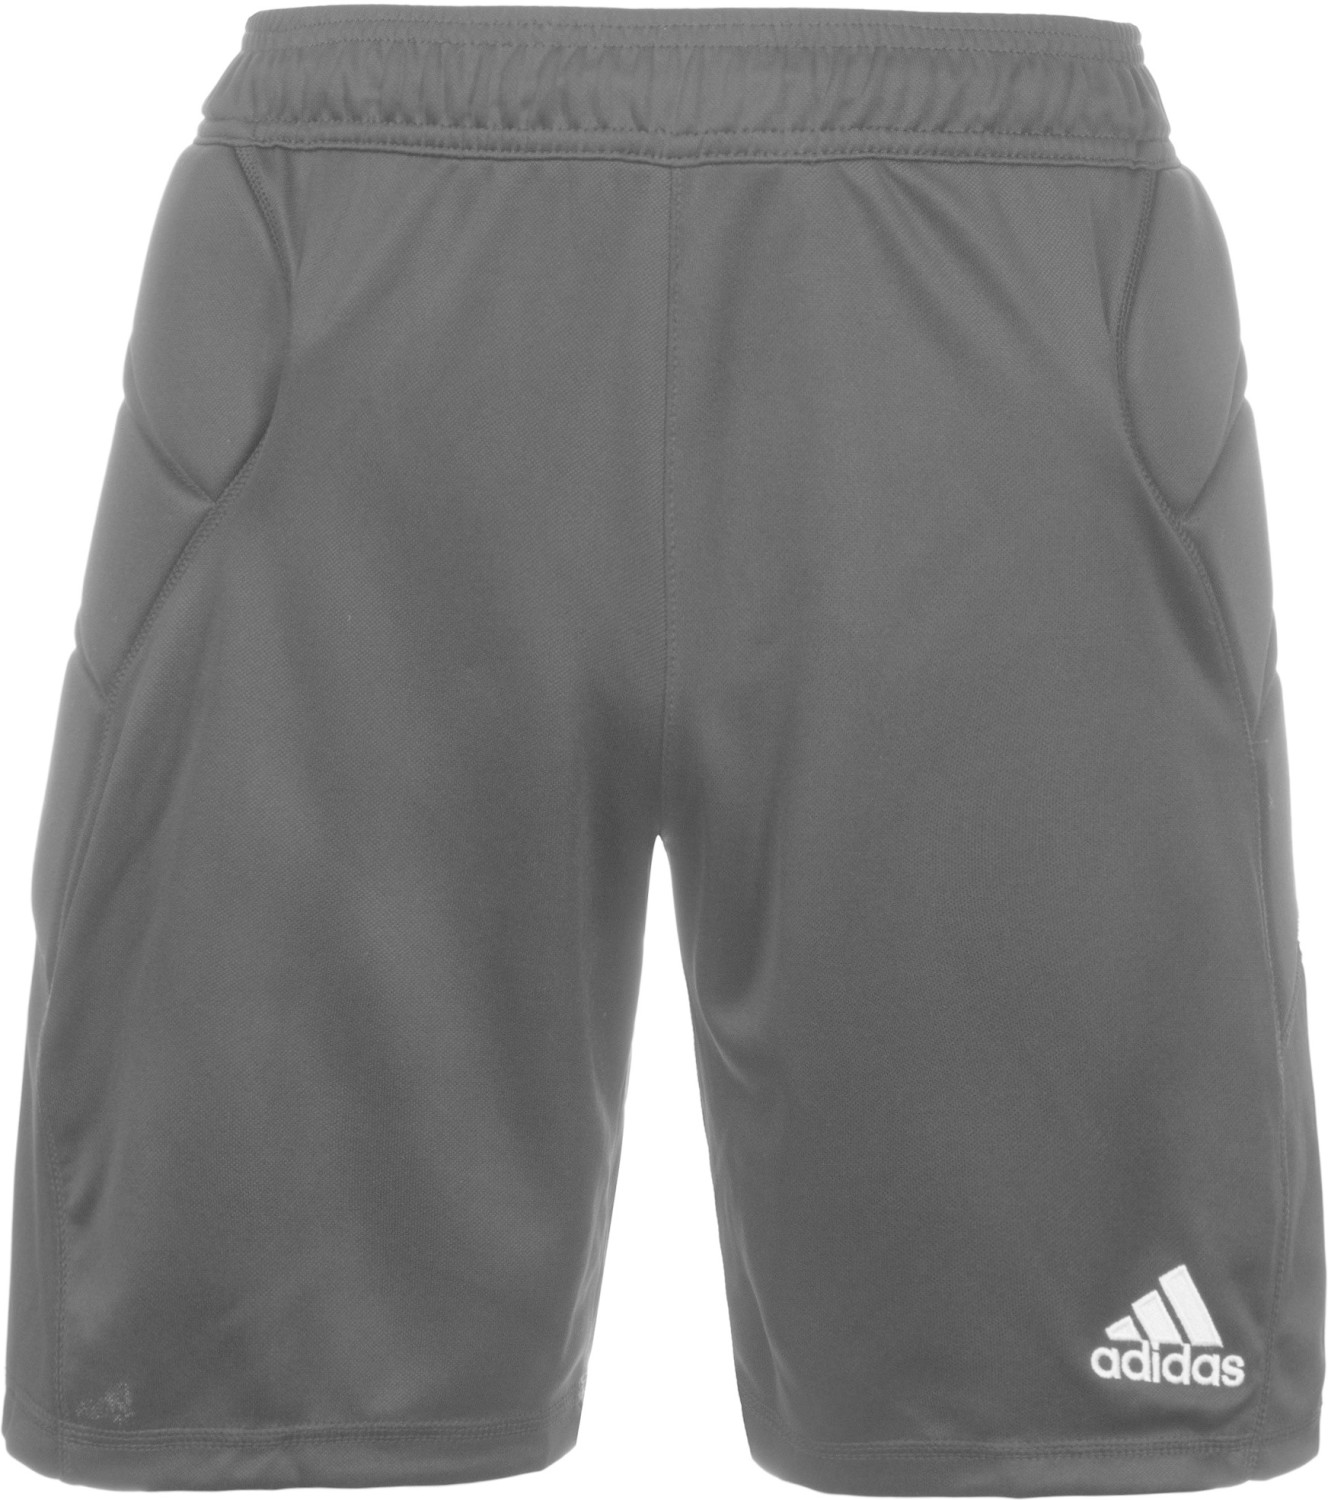 Adidas Tierro 13 Goalkeeper Shorts (Z11471)